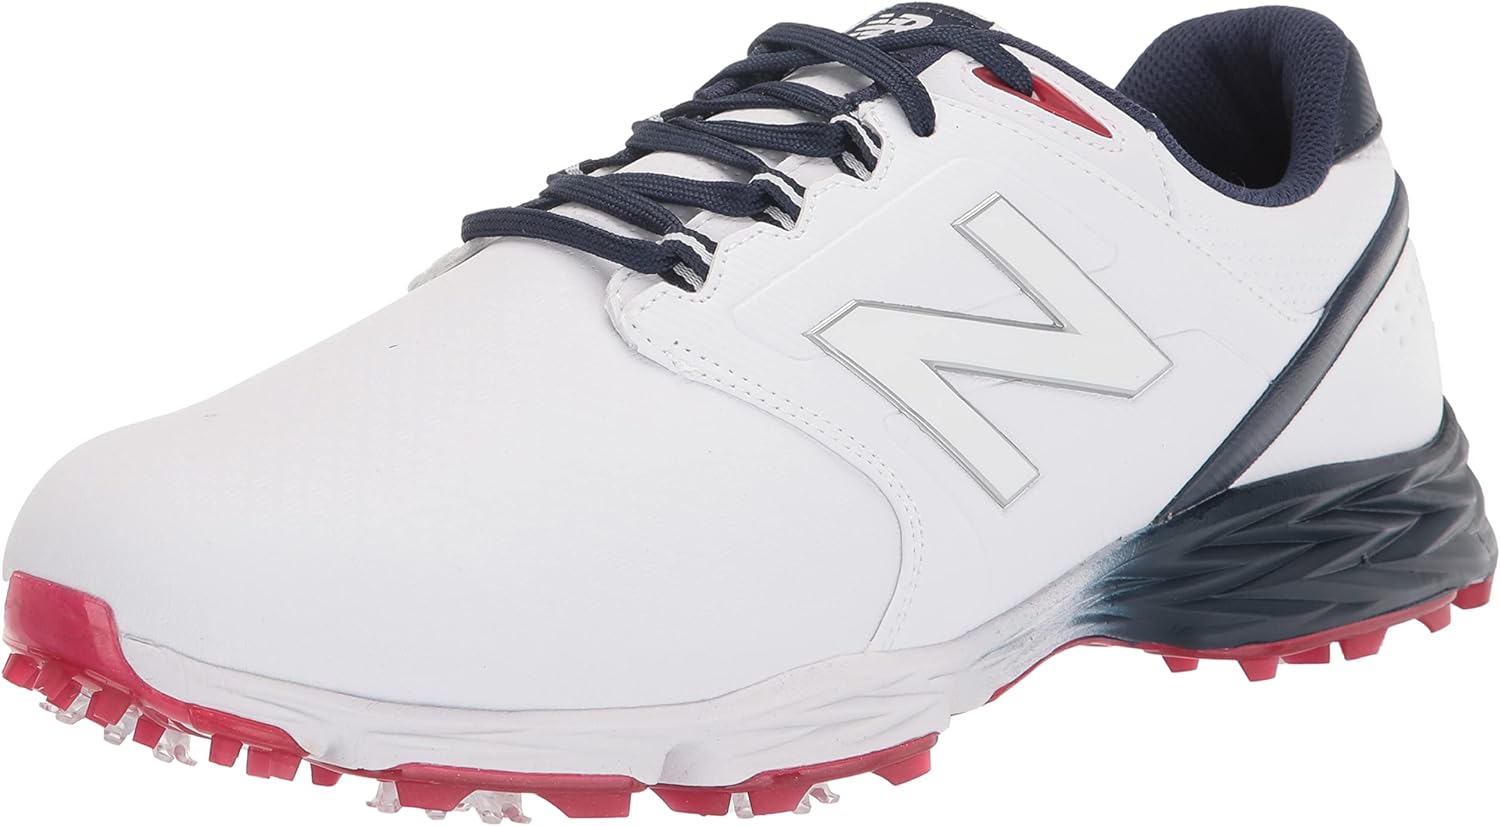 New Balance Men’s Striker V3 Golf Shoe Review